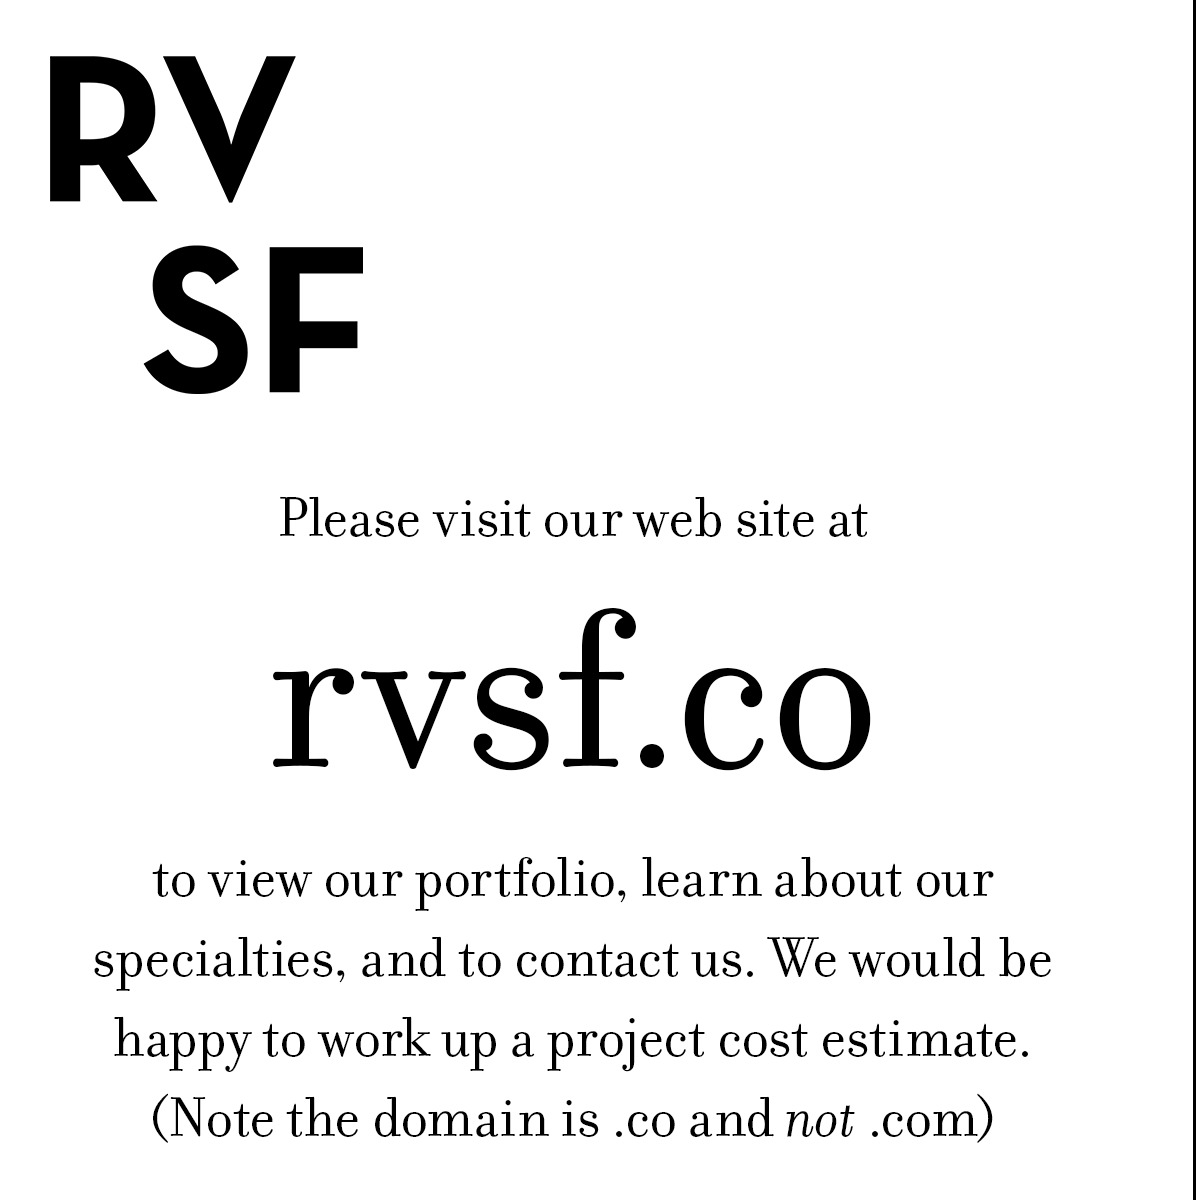 RVSF Inc. Photo